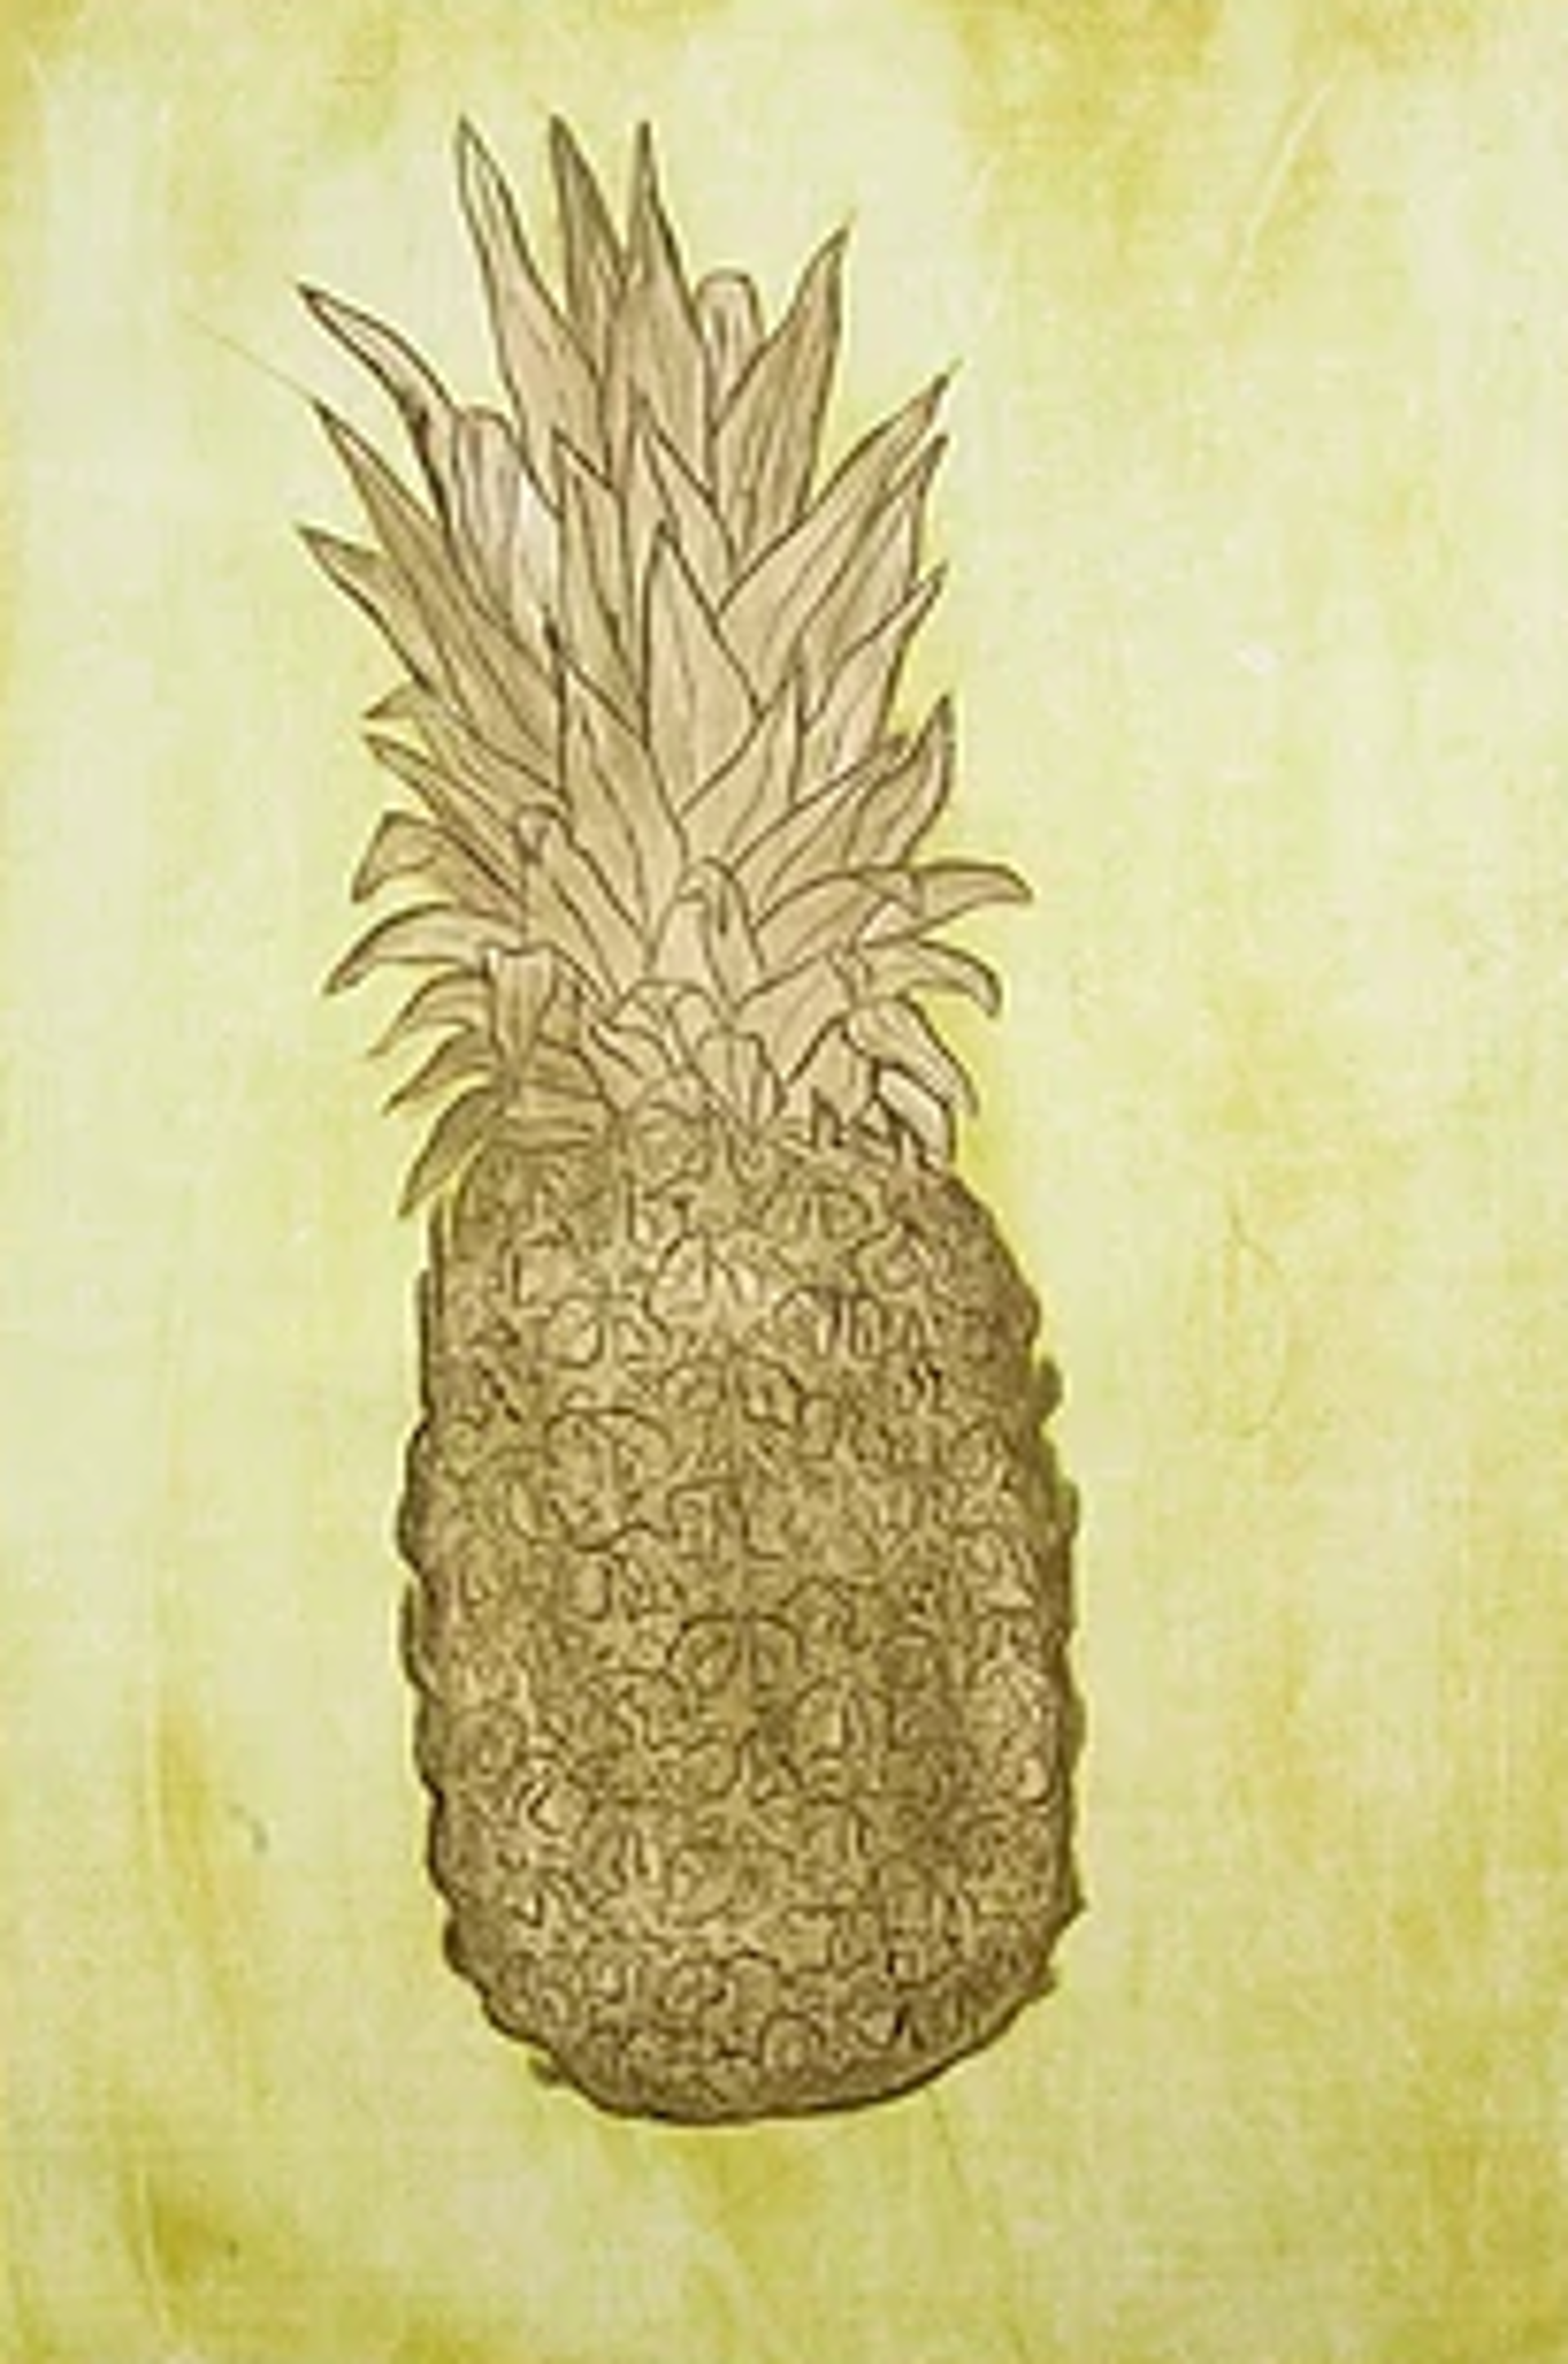 Single Pineapple (monochromatic) by David Hefner